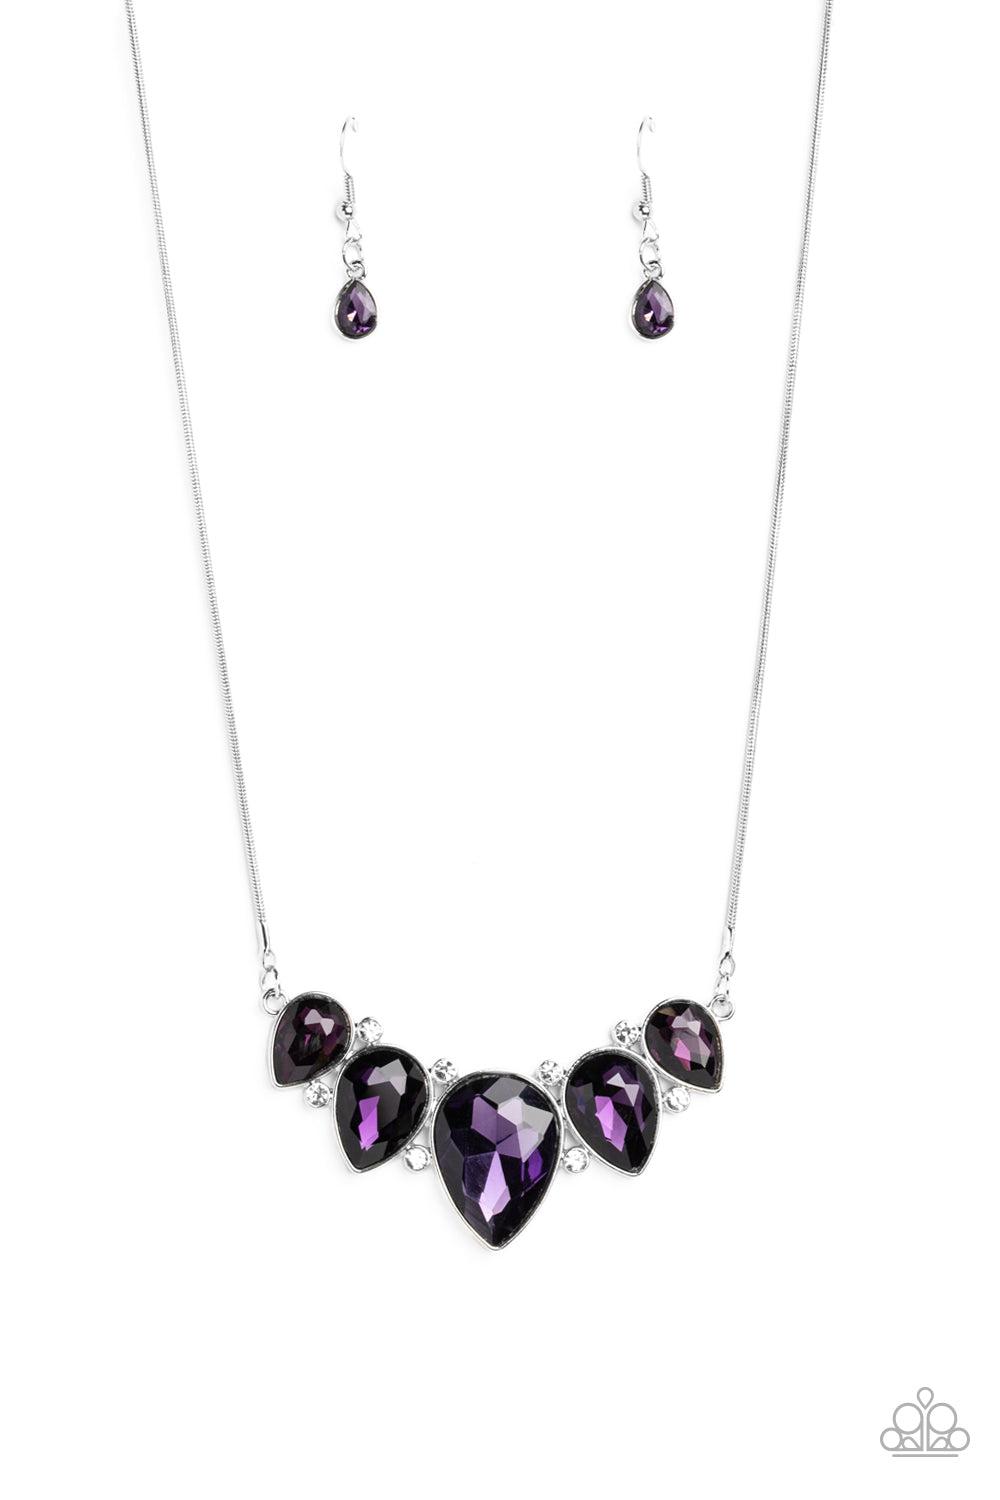 Regally Refined Purple Rhinestone Necklace - Paparazzi Accessories- lightbox - CarasShop.com - $5 Jewelry by Cara Jewels